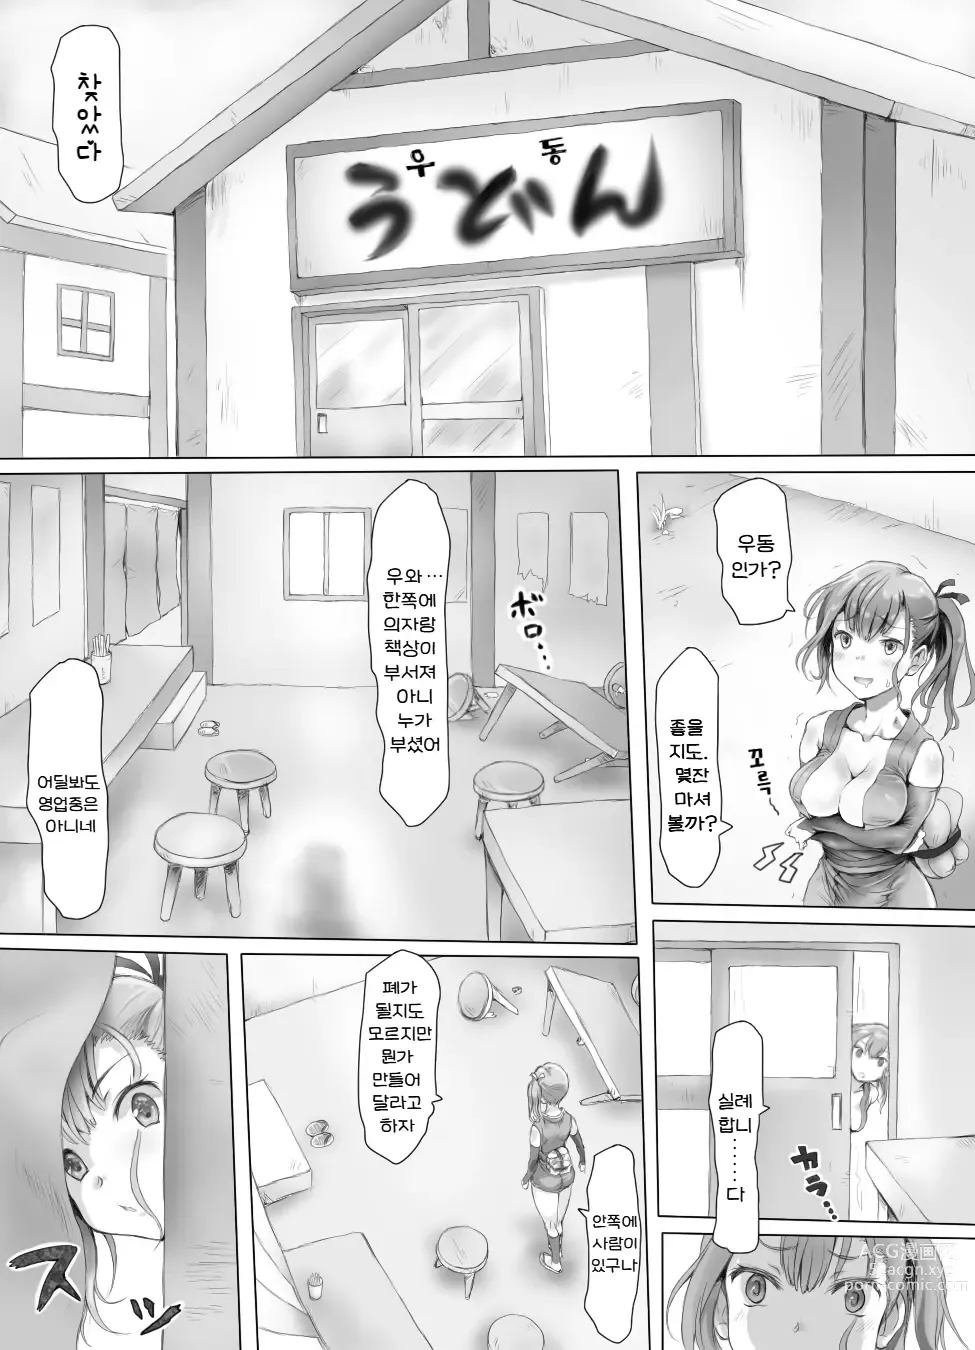 Page 7 of doujinshi 음착소녀 ~이렇게까지 굴욕을 당했는데도 아직도 살고 싶은 거니?~